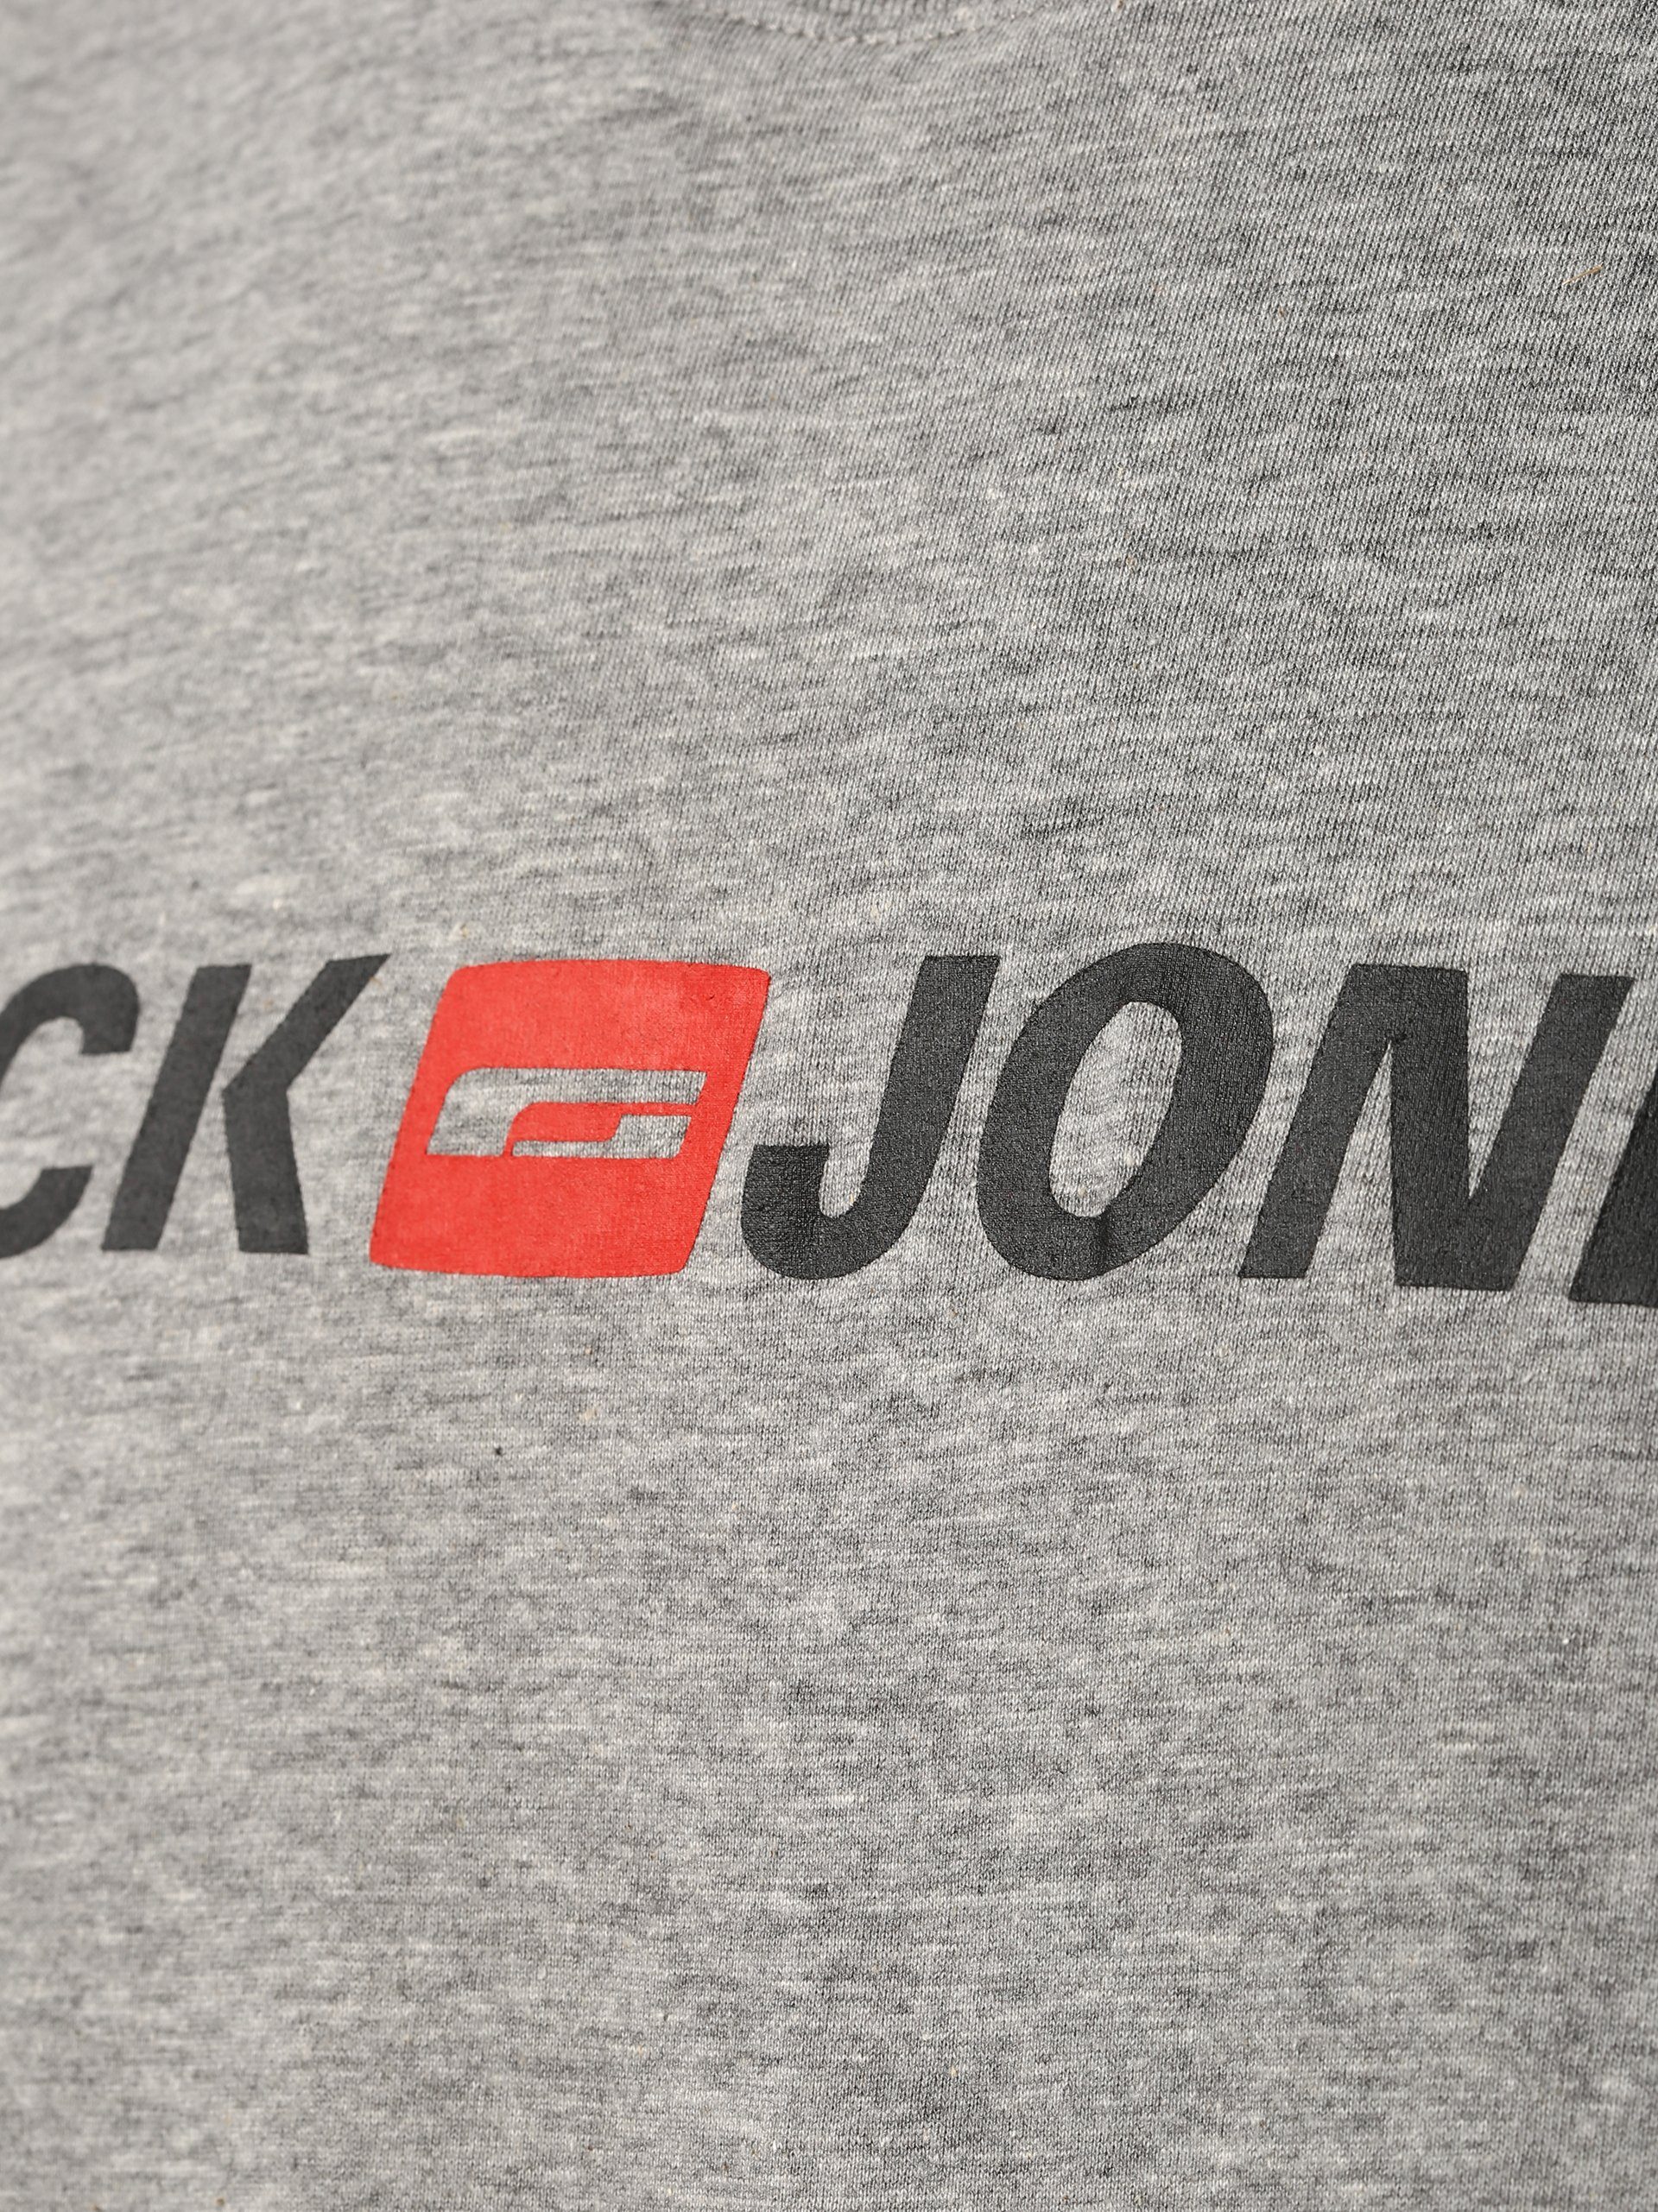 Jack & hellgrau JJECorp T-Shirt Jones